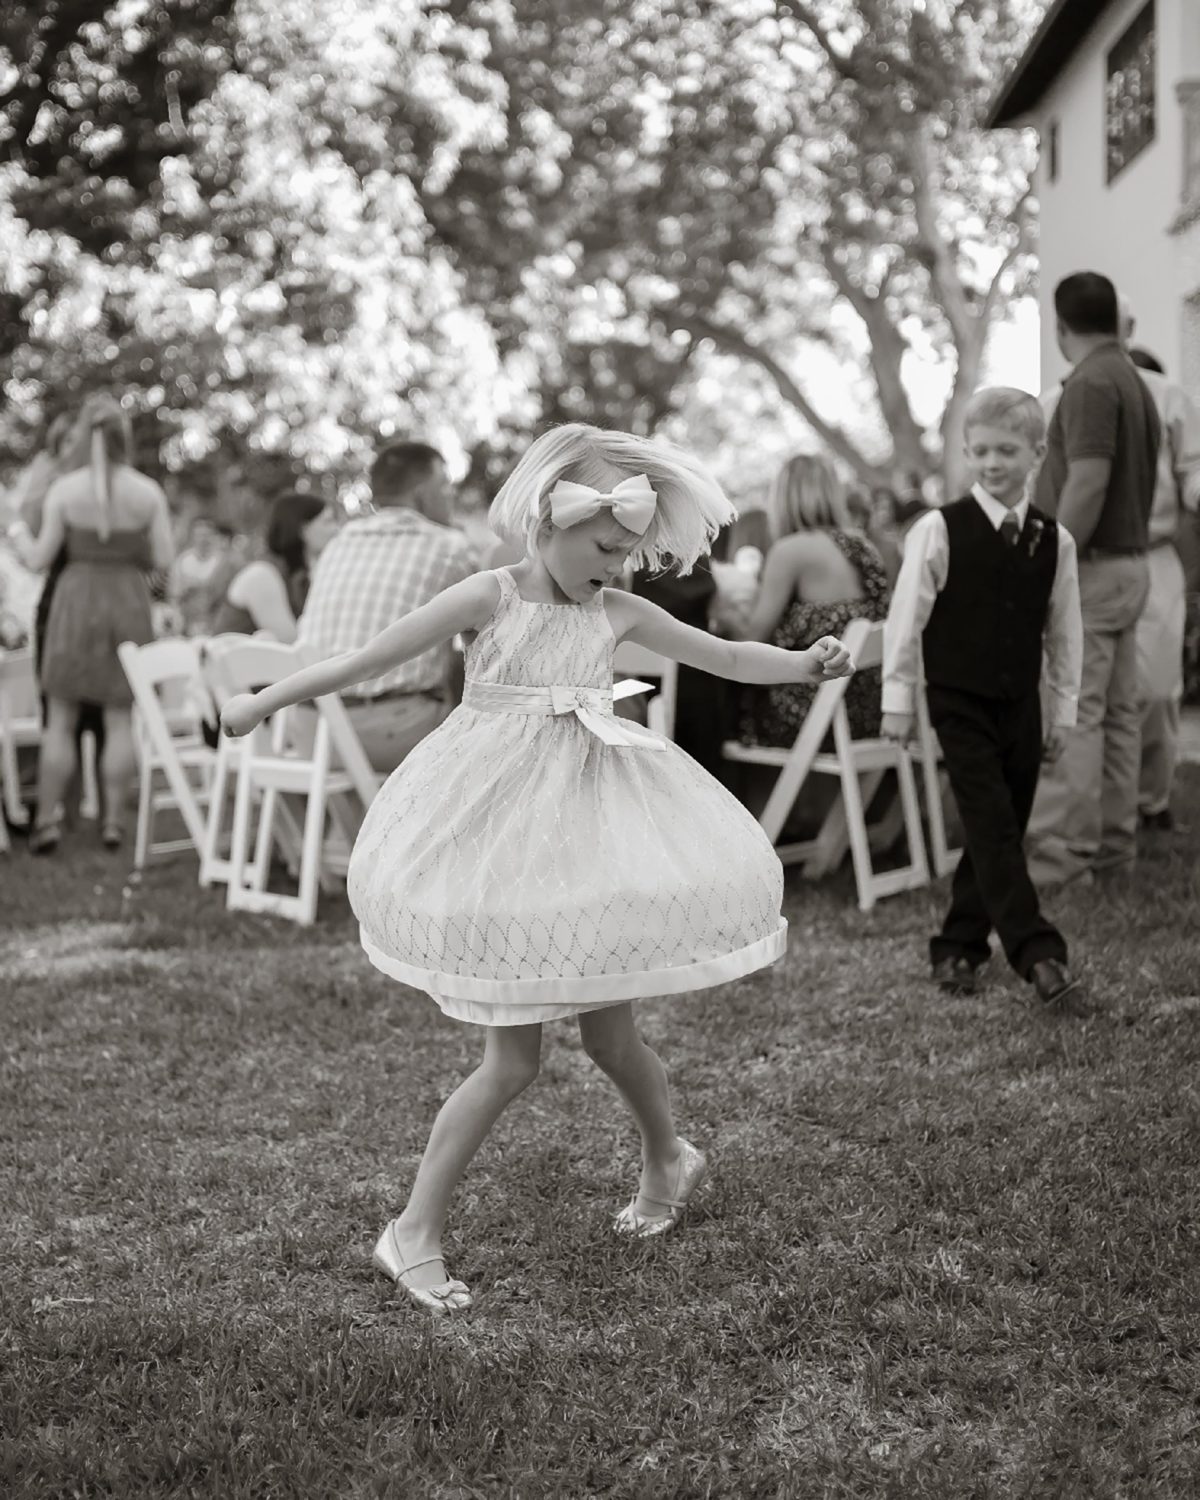 A flower girl twirls at a wedding reception in New Braunfels Texas as a boy watches Leica wedding photographer Philip Thomas